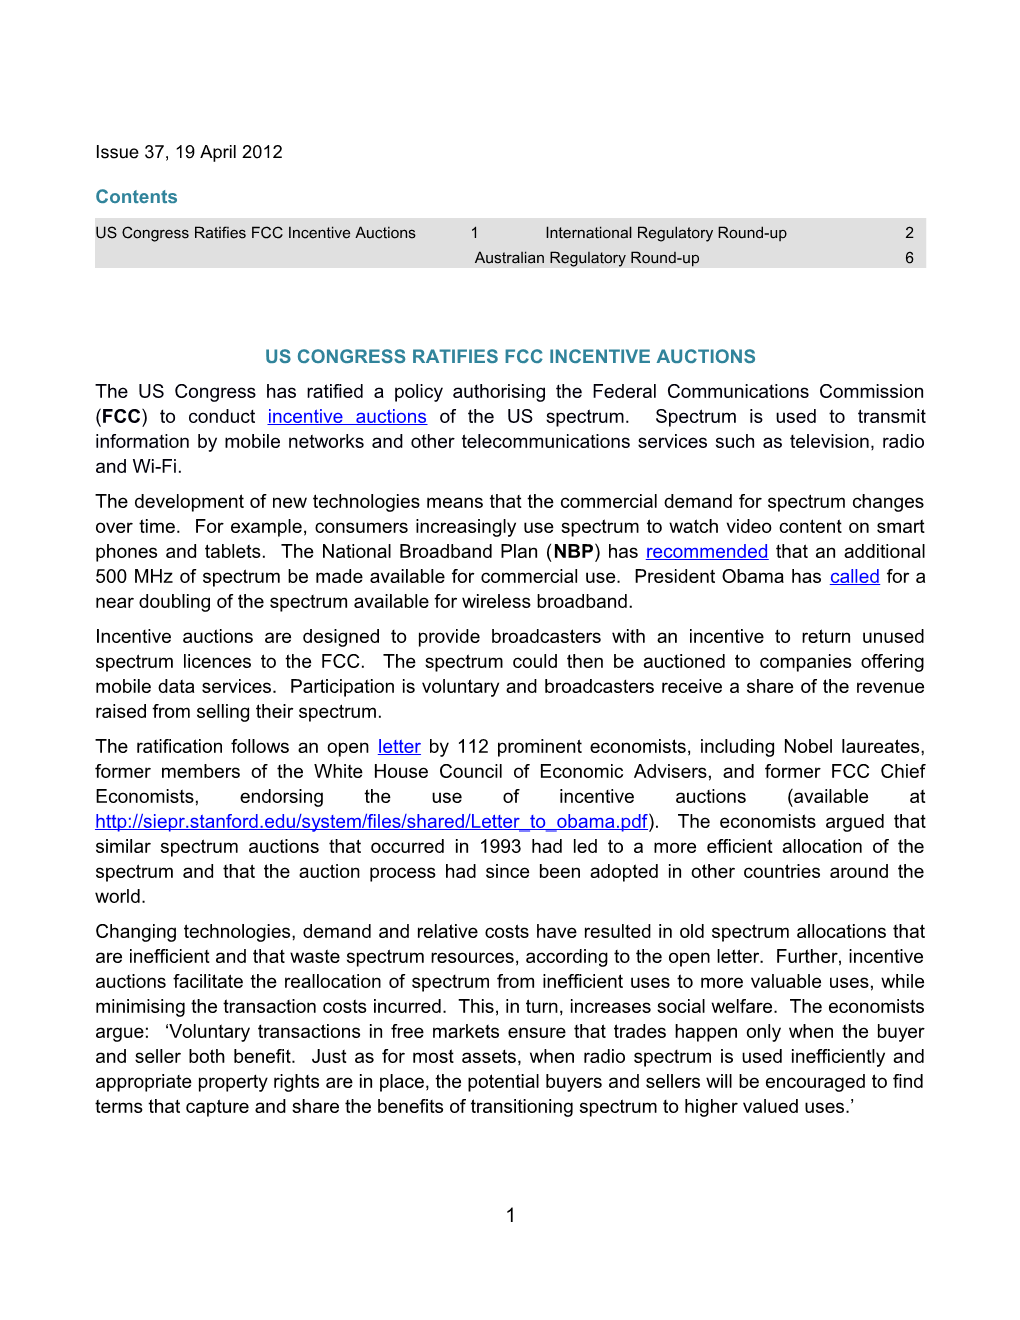 Regulatory Observer Issue 37 19 April 2012